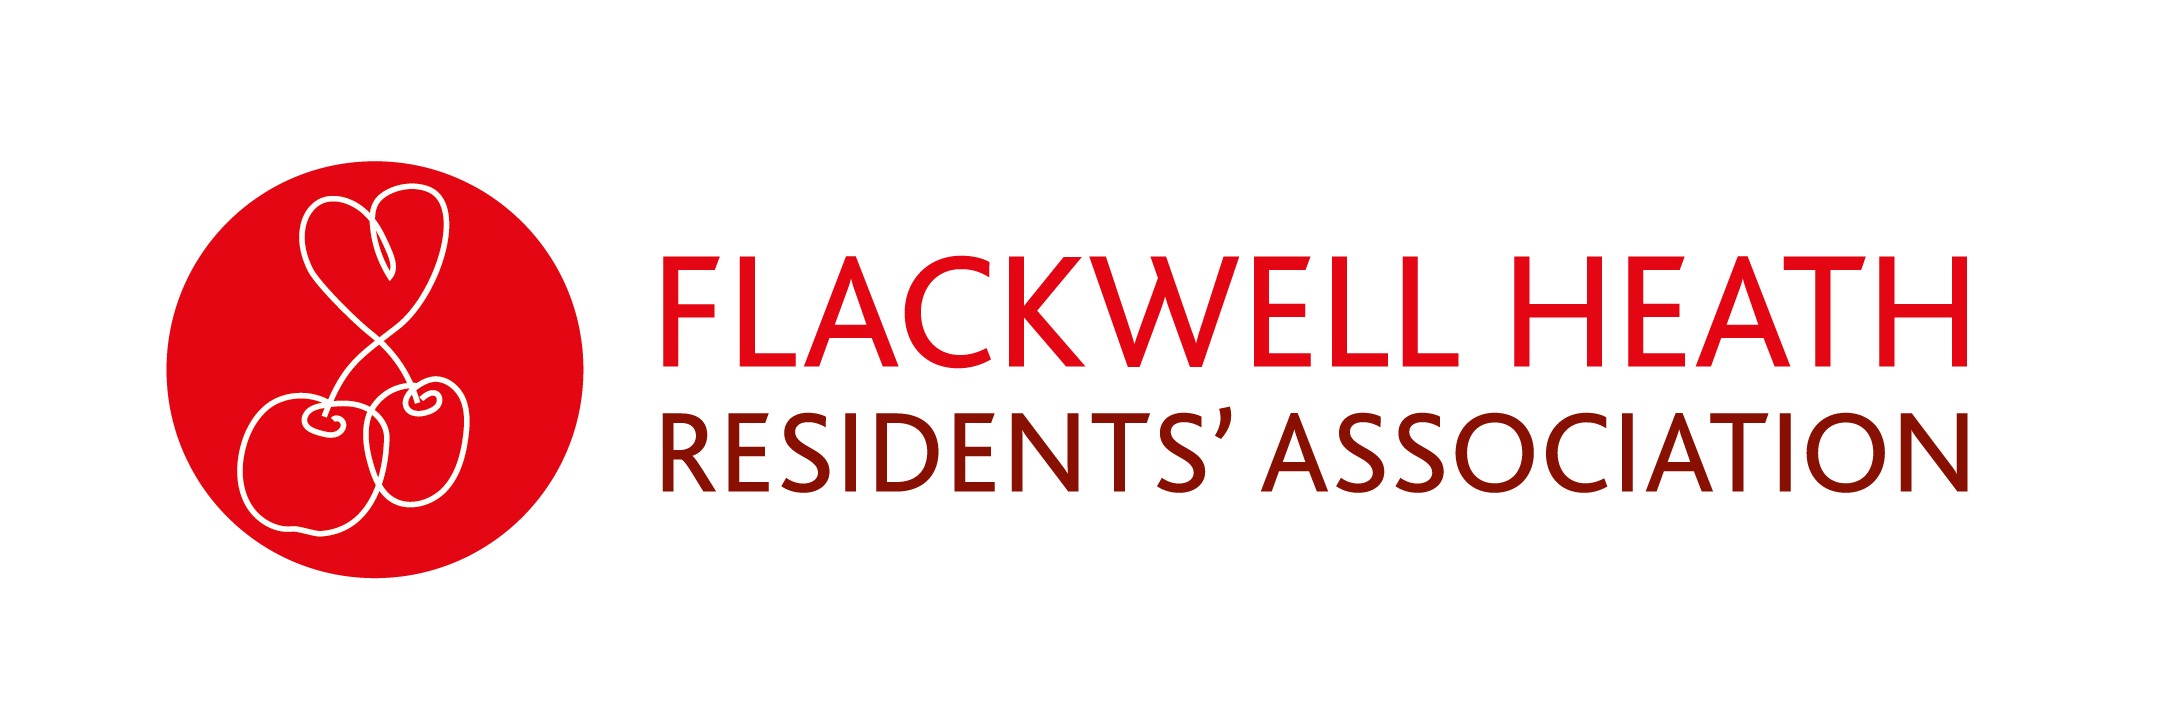 Flackwell Heath Residents' Association (FHRA)